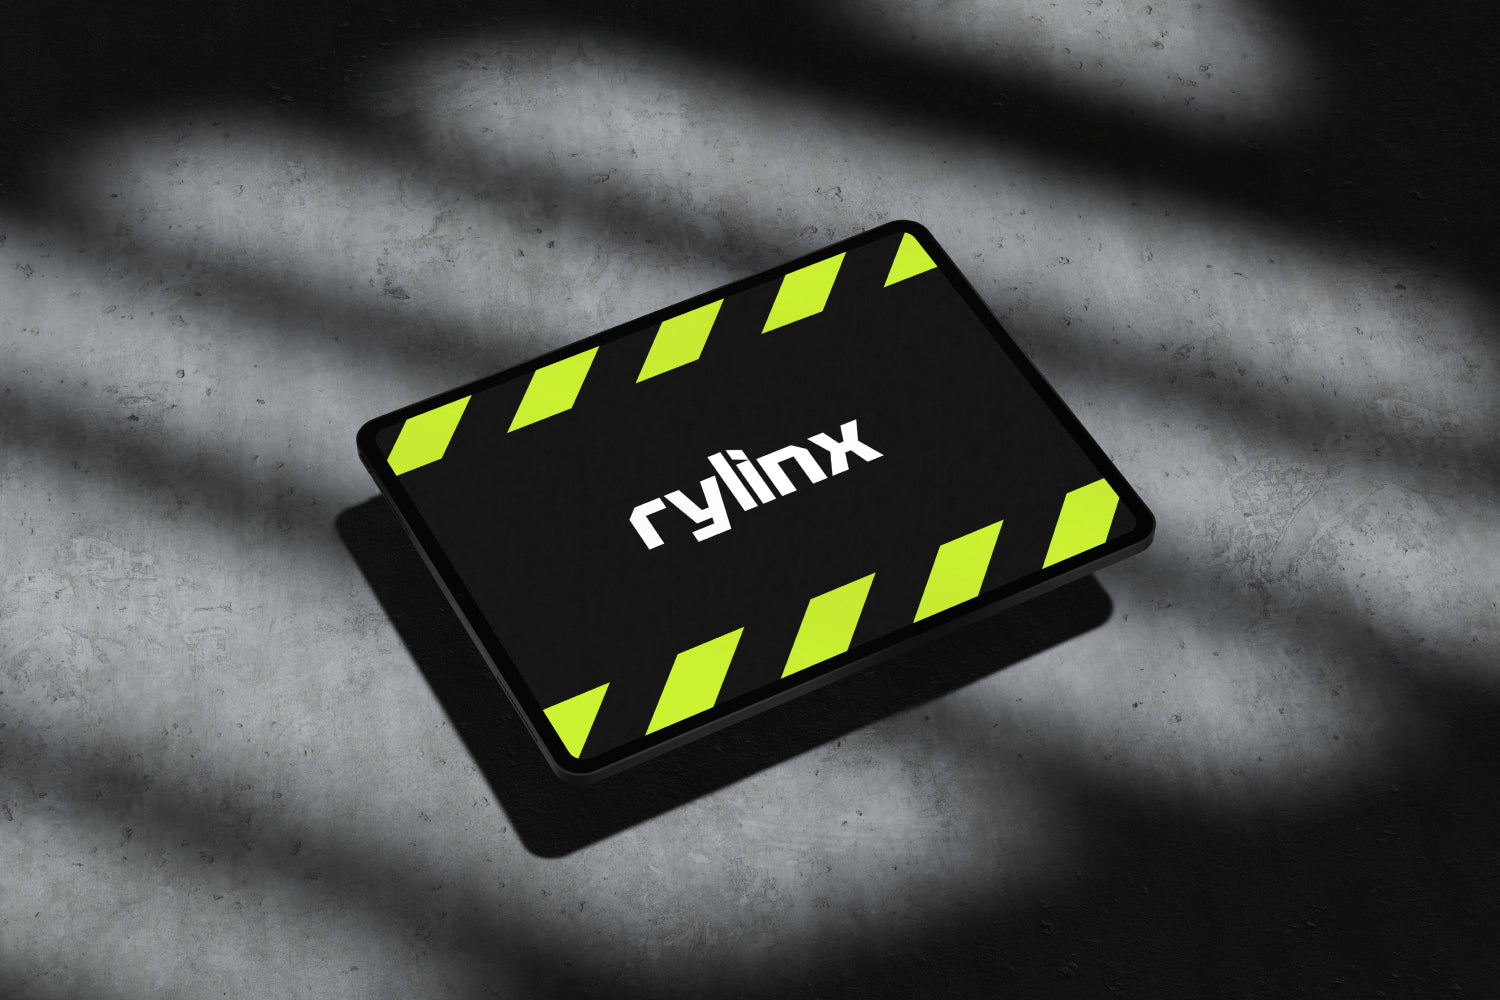 Rylinx Device Mockups